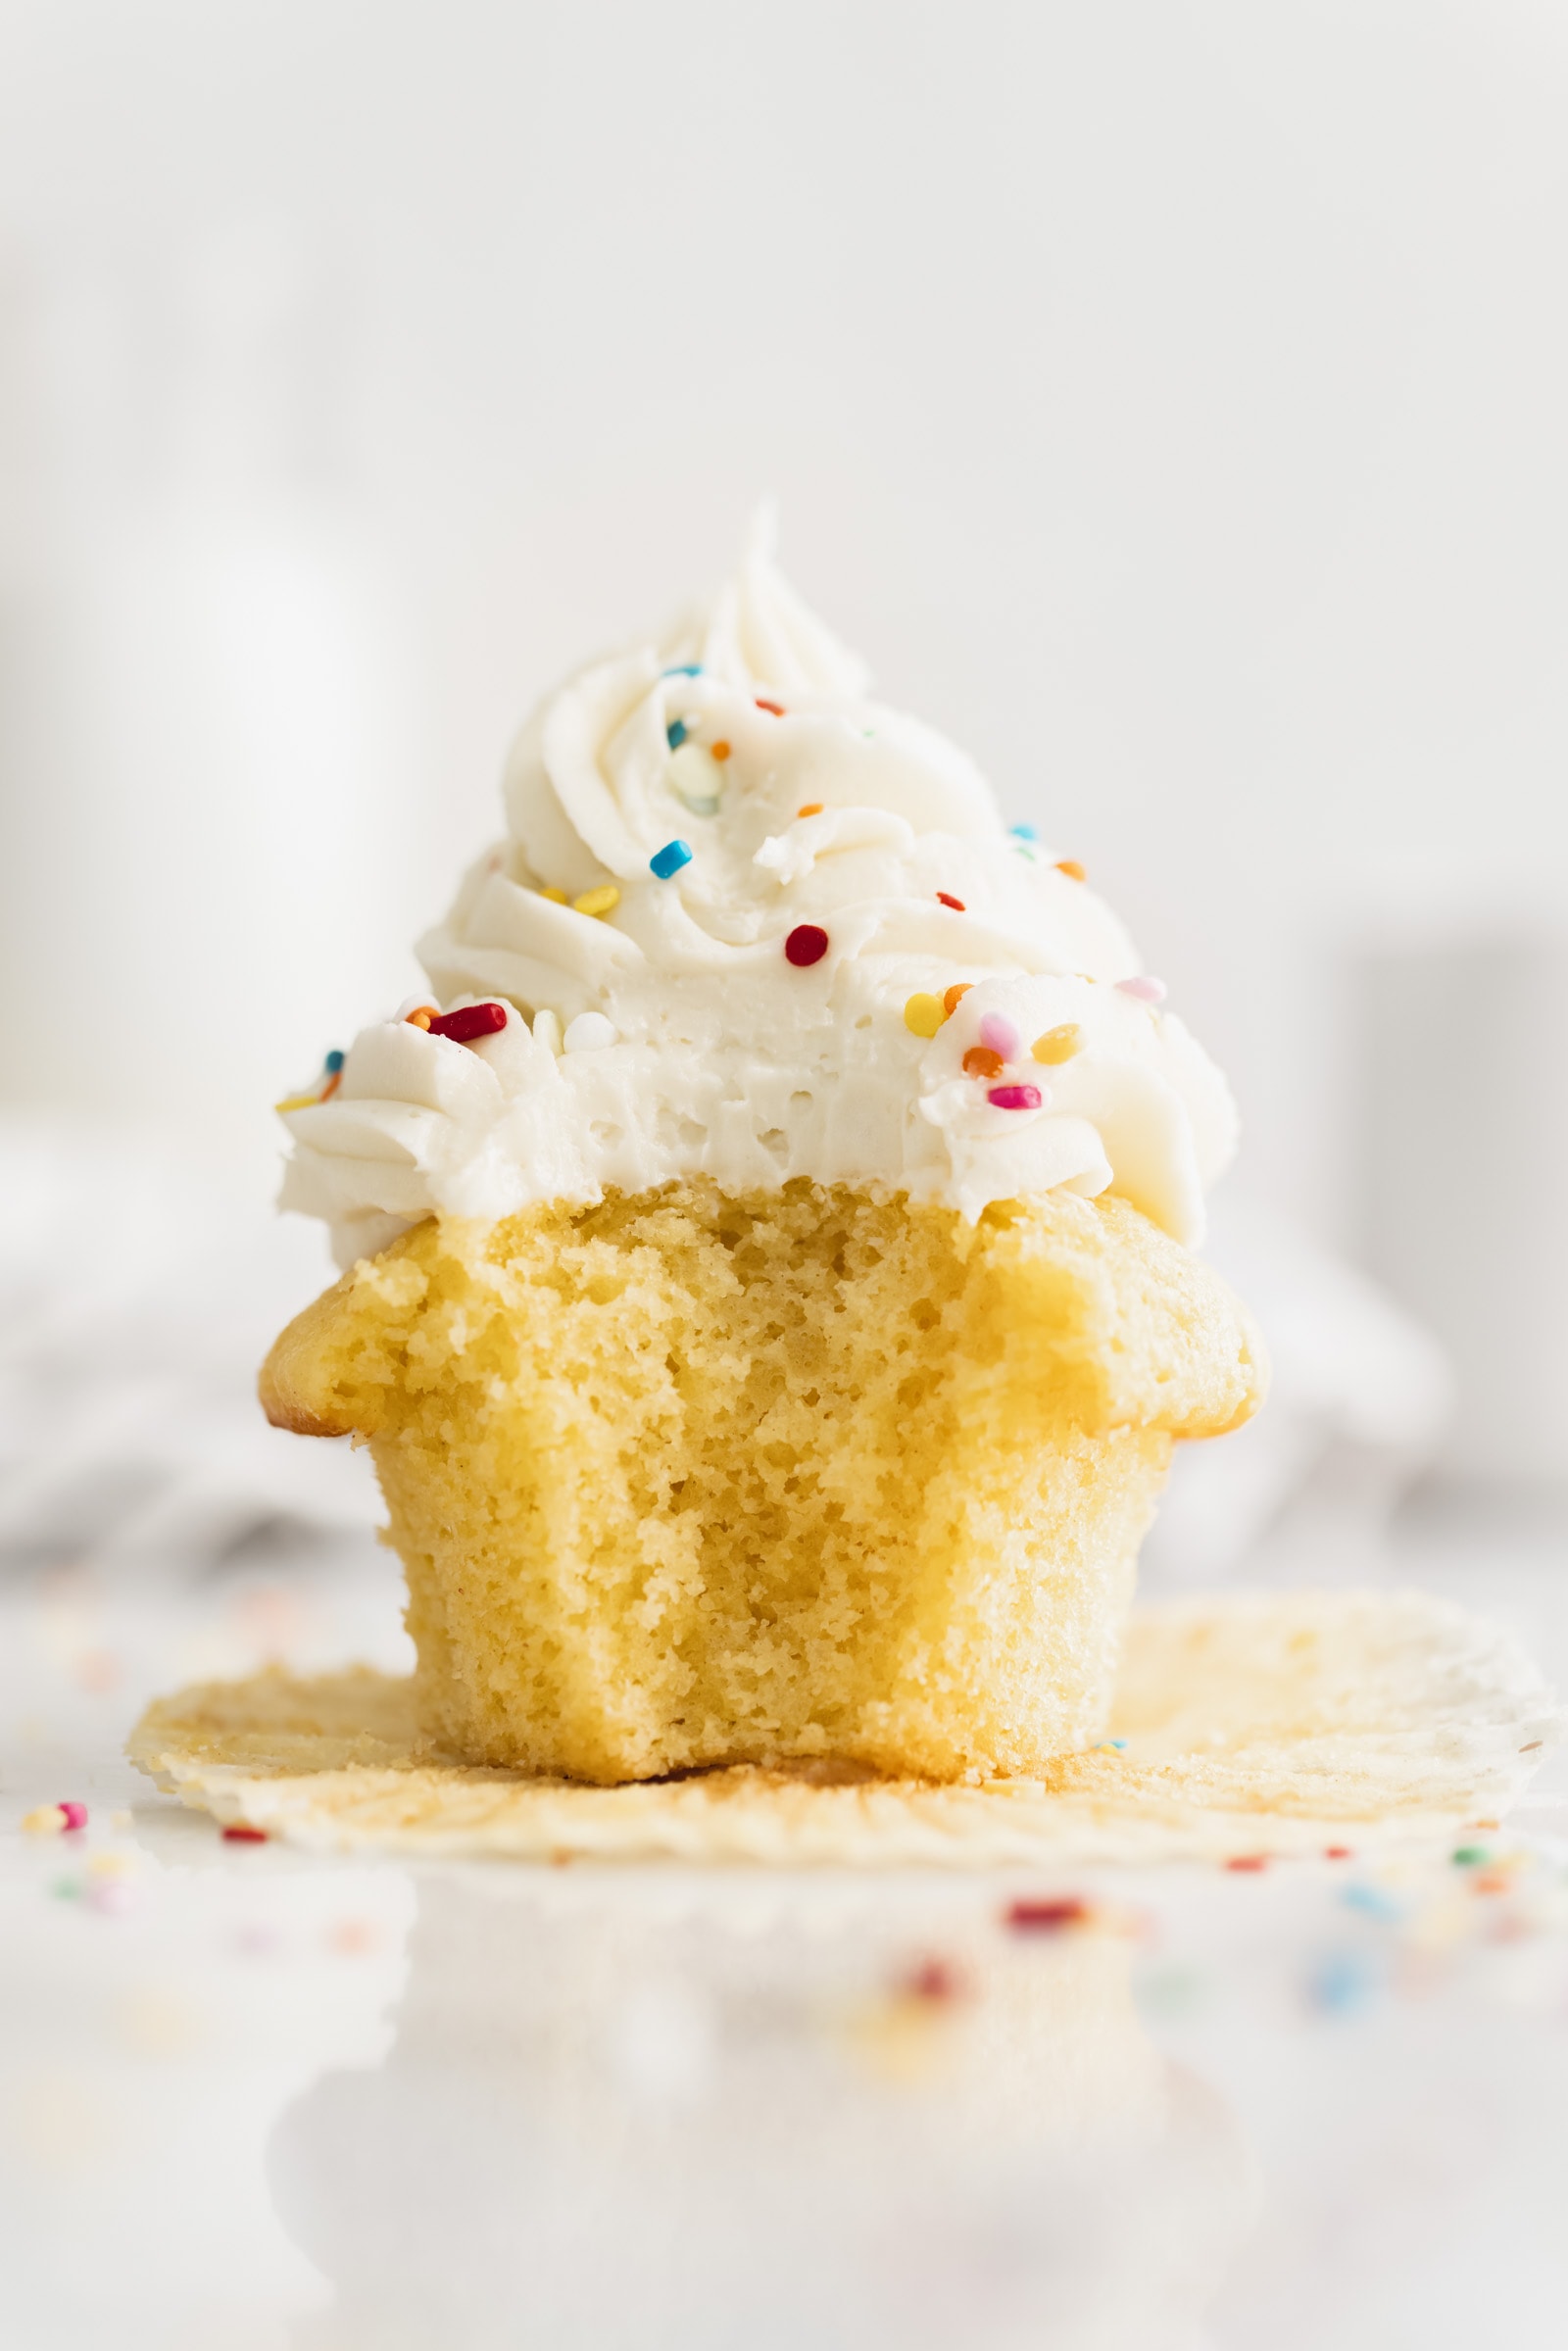 How to Make Cupcakes | 3 Easy Cupcake Recipes - YouTube